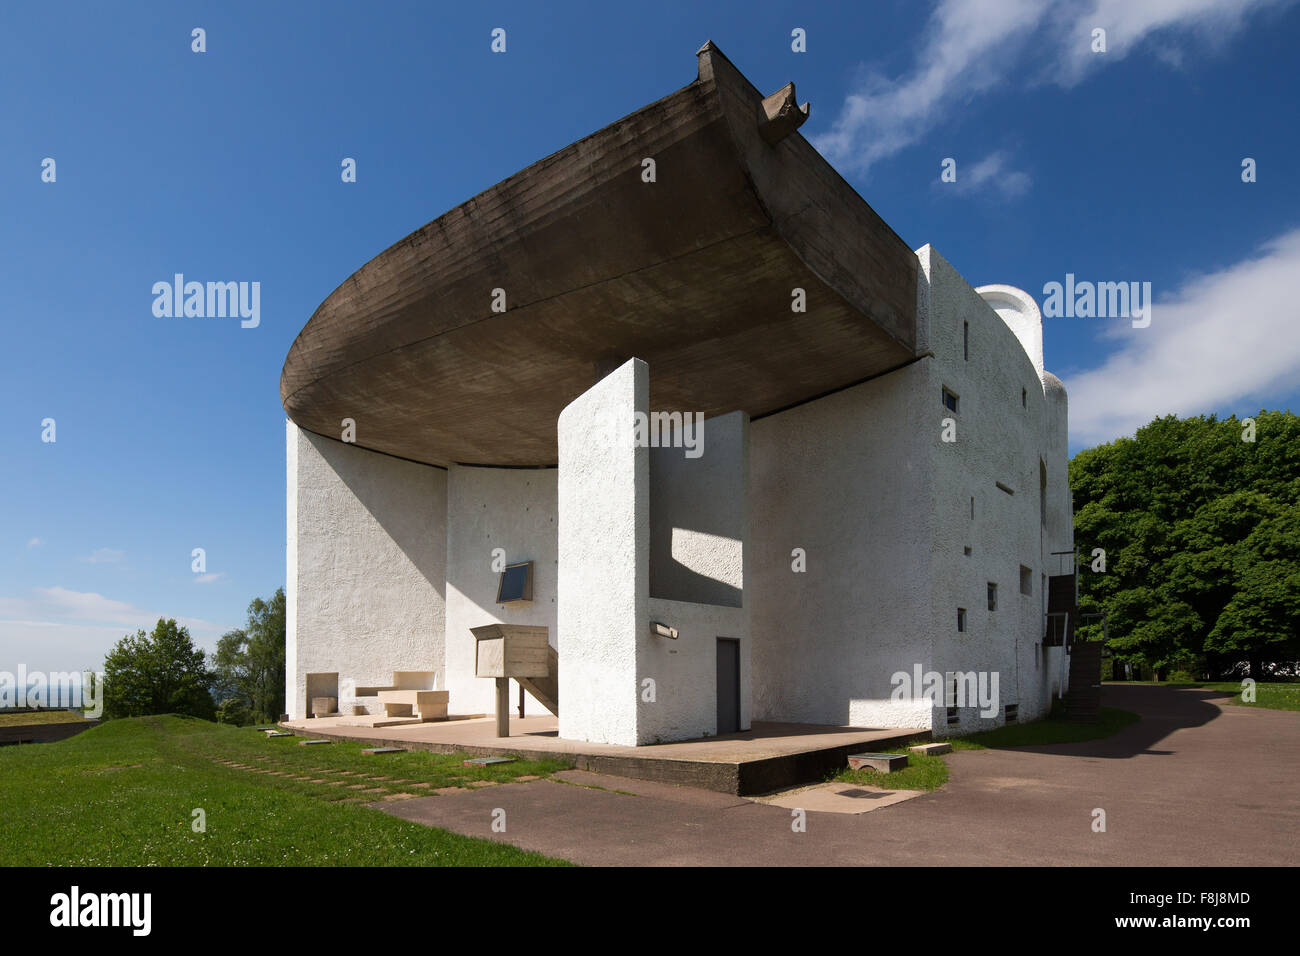 Notre Dame du Haut, capilla de Ronchamp diseñada por el arquitecto suizo-francés Le Corbusier, Francia. Foto de stock